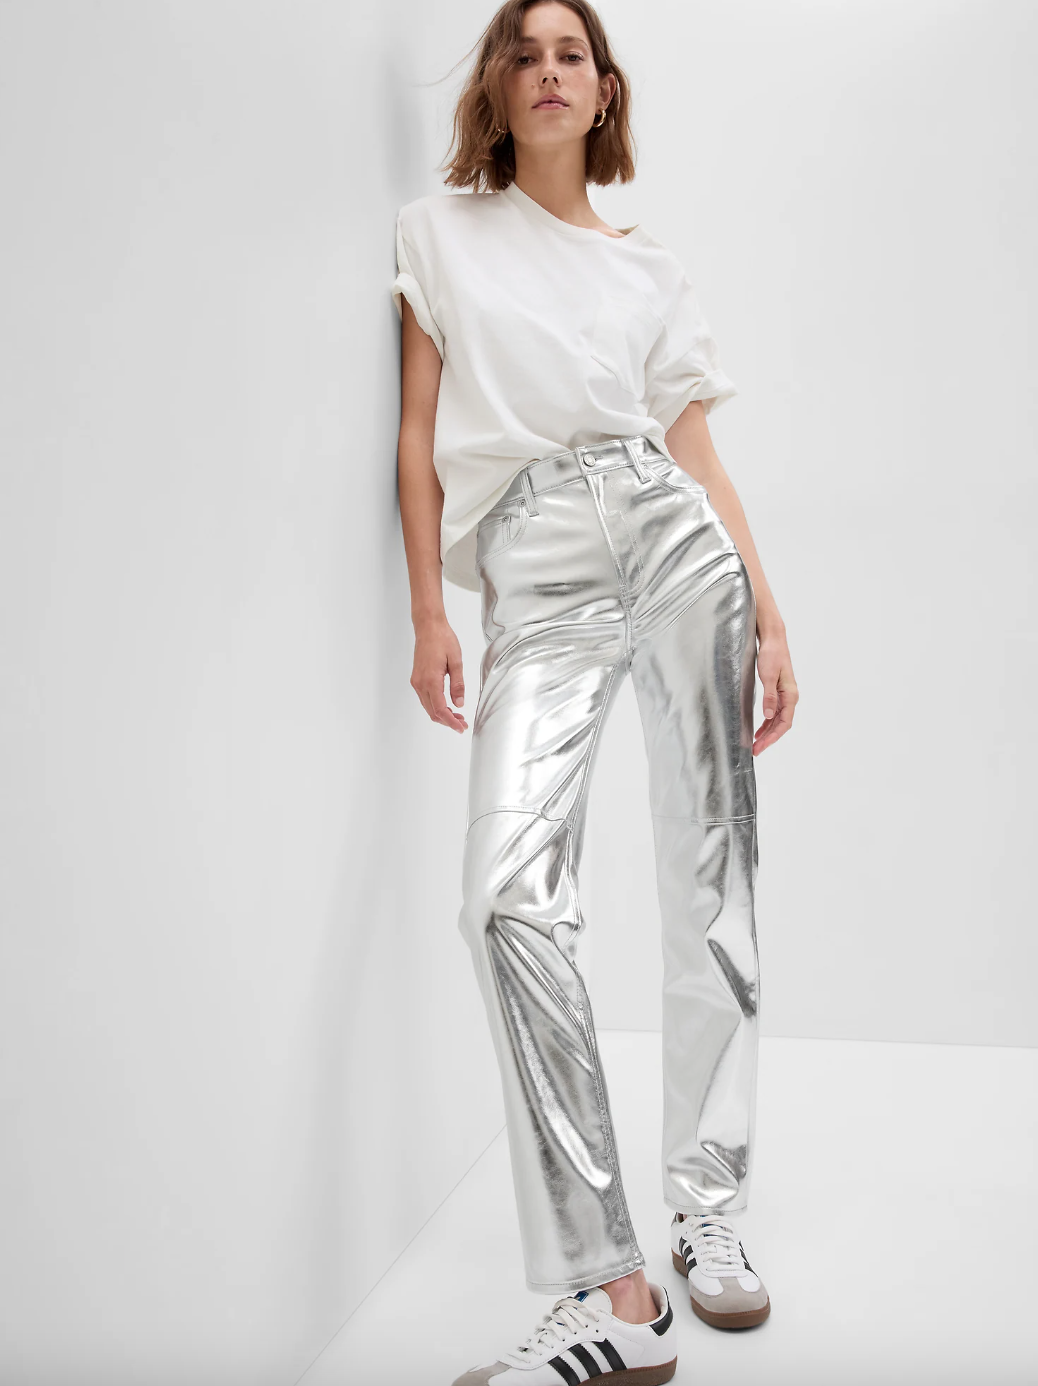 Amy Lynn lupe pants in metallic silver  ASOS